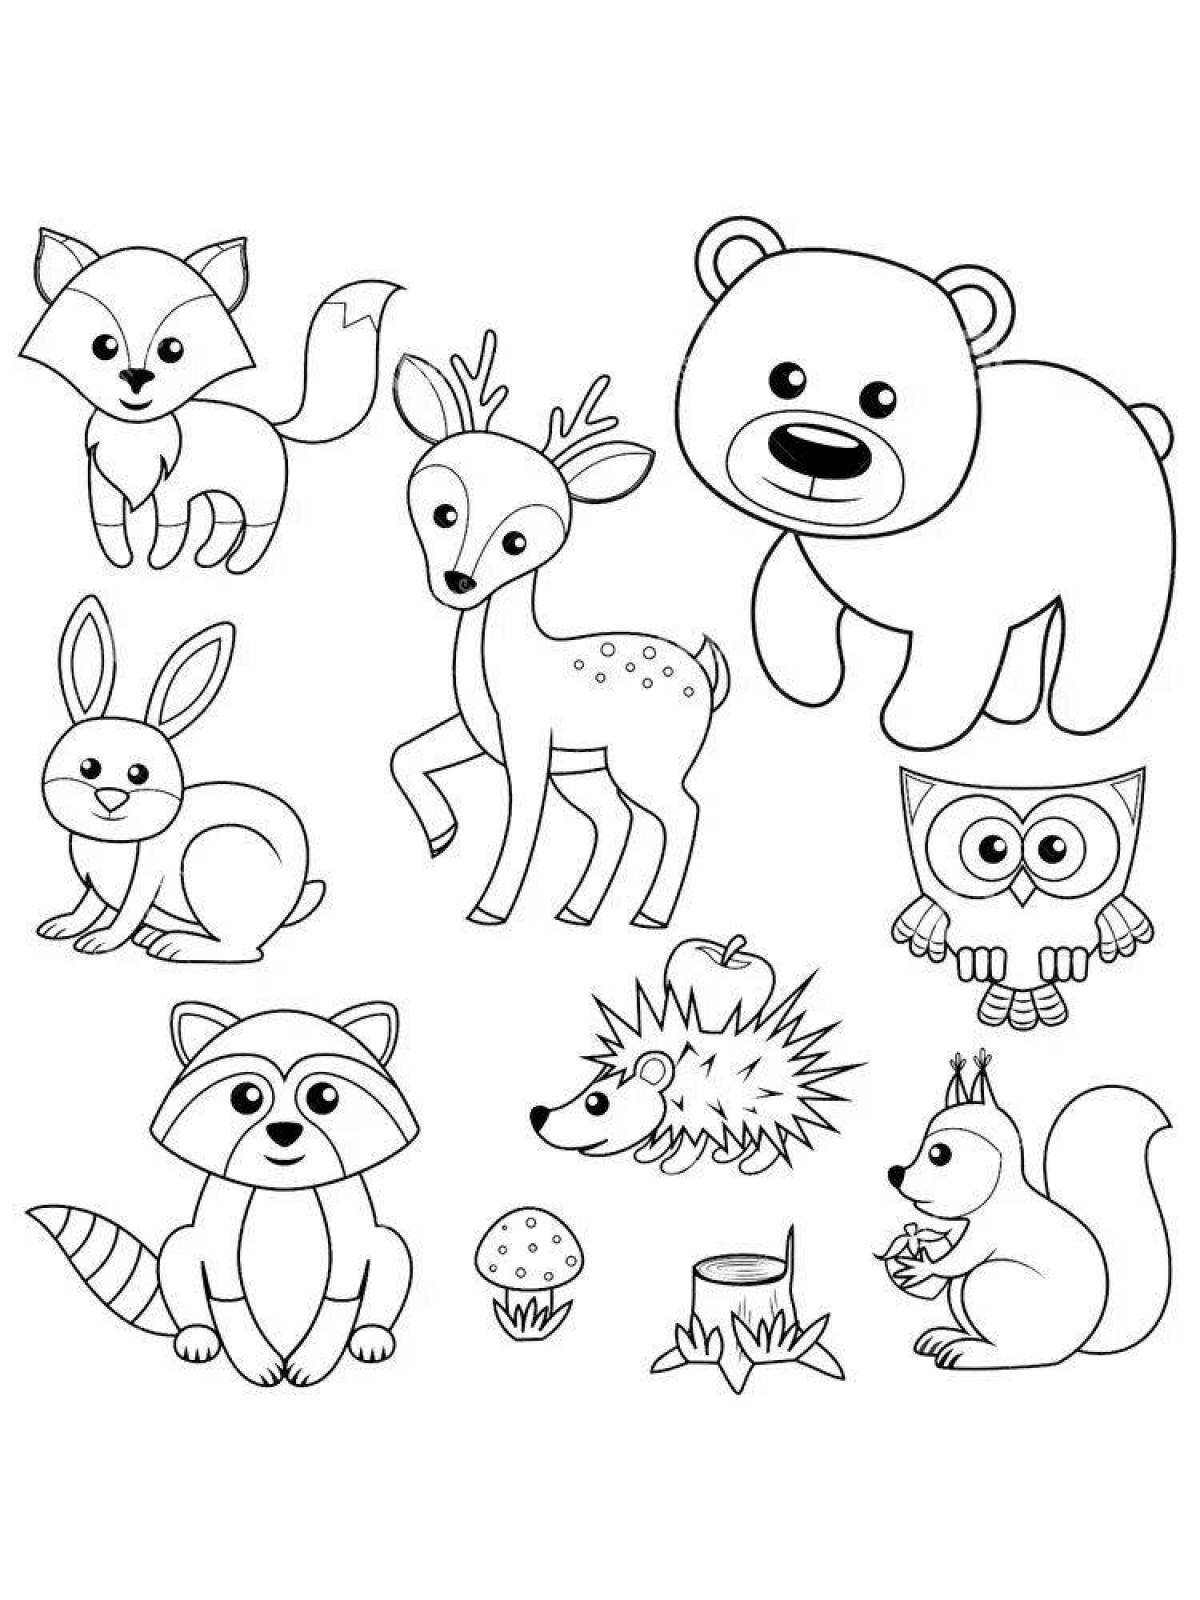 Fun animal coloring for teens